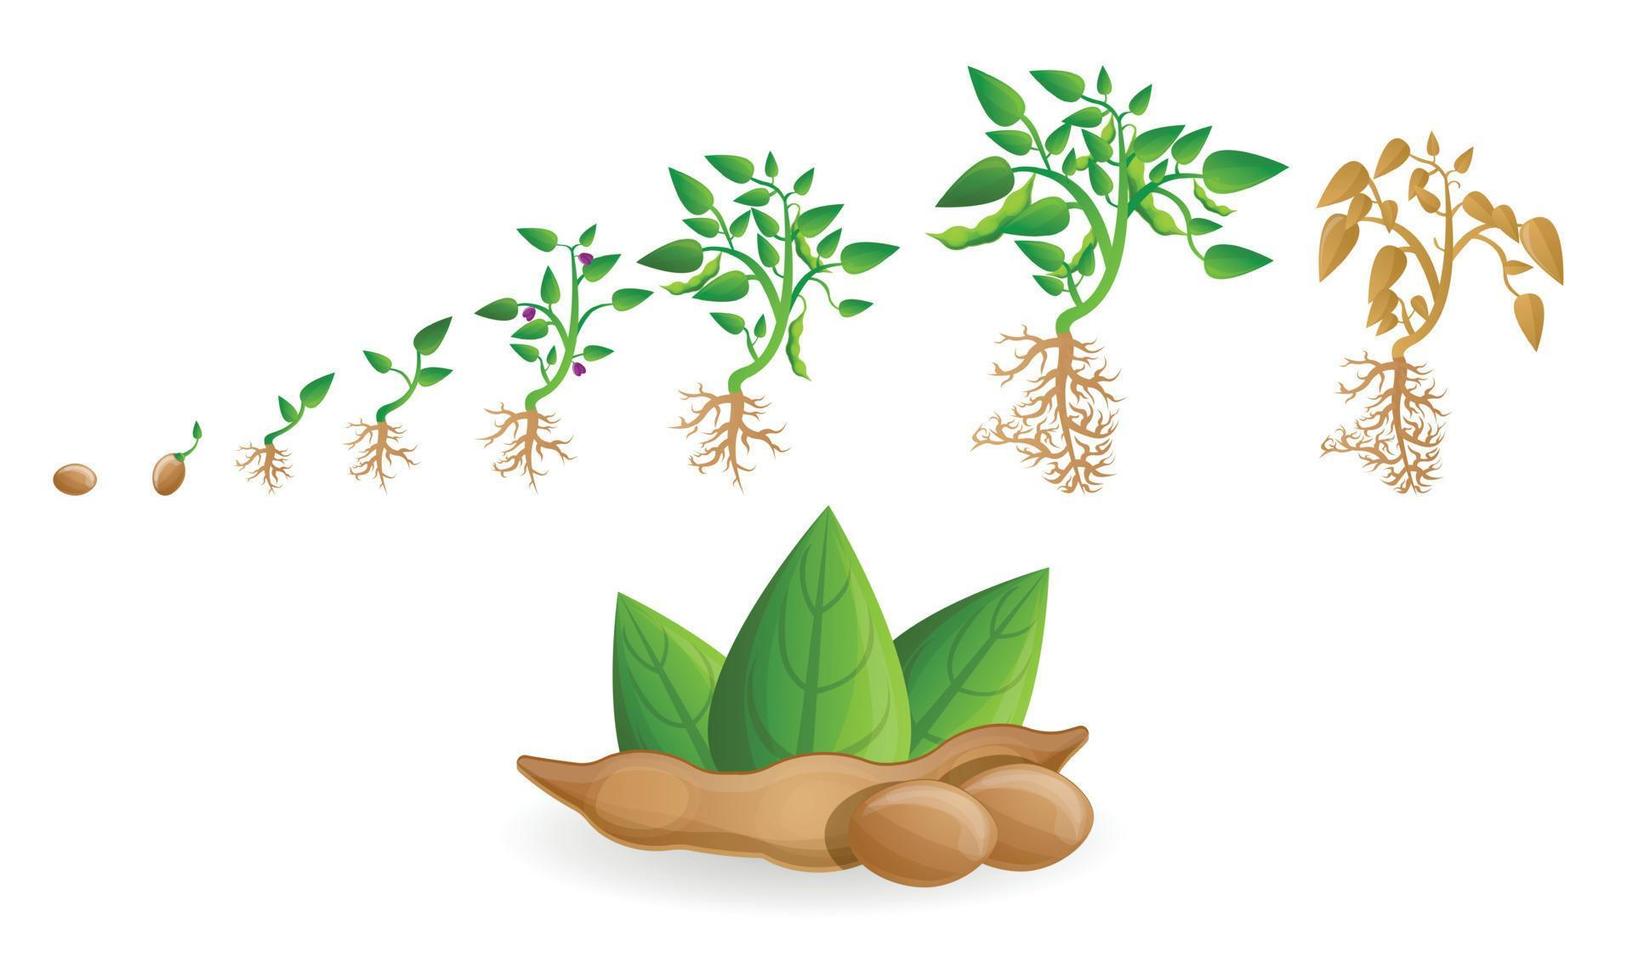 Soybean icon set, cartoon style vector